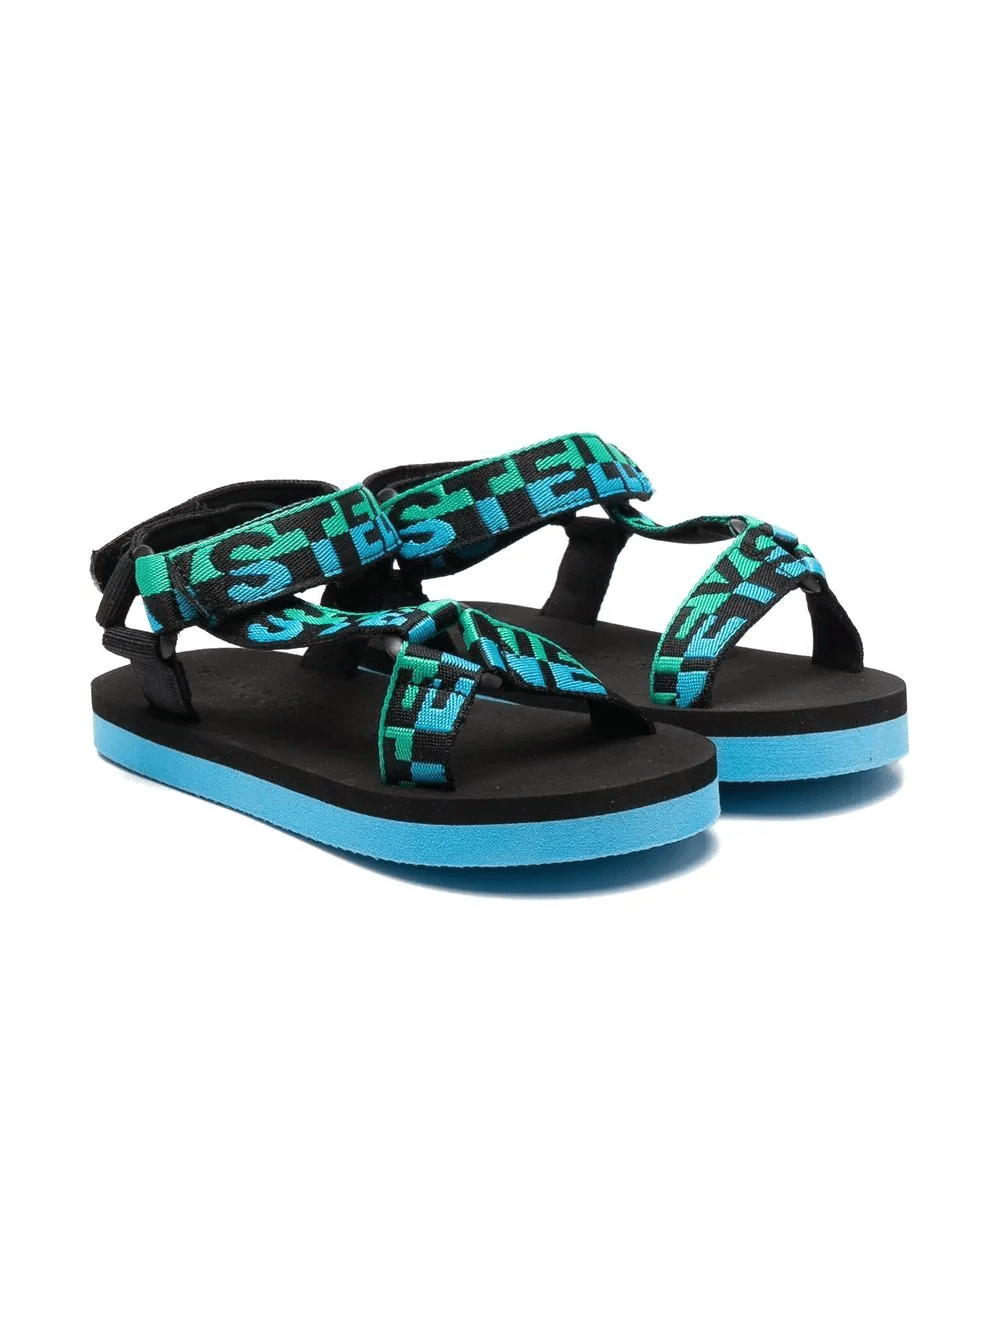 Boys Velcro Sandals